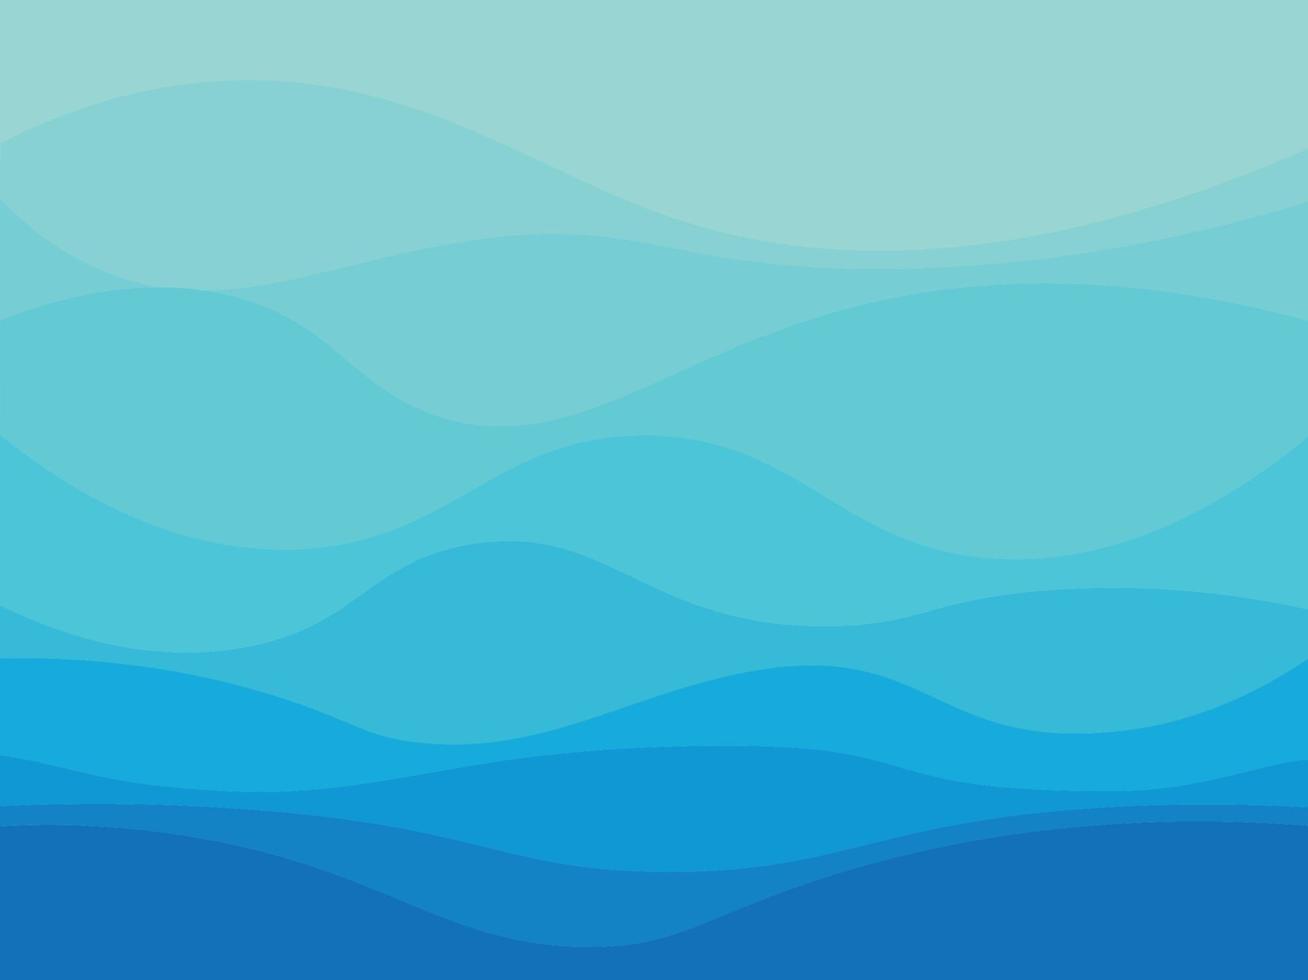 Blue water wave sea line pattern background vector illustration.